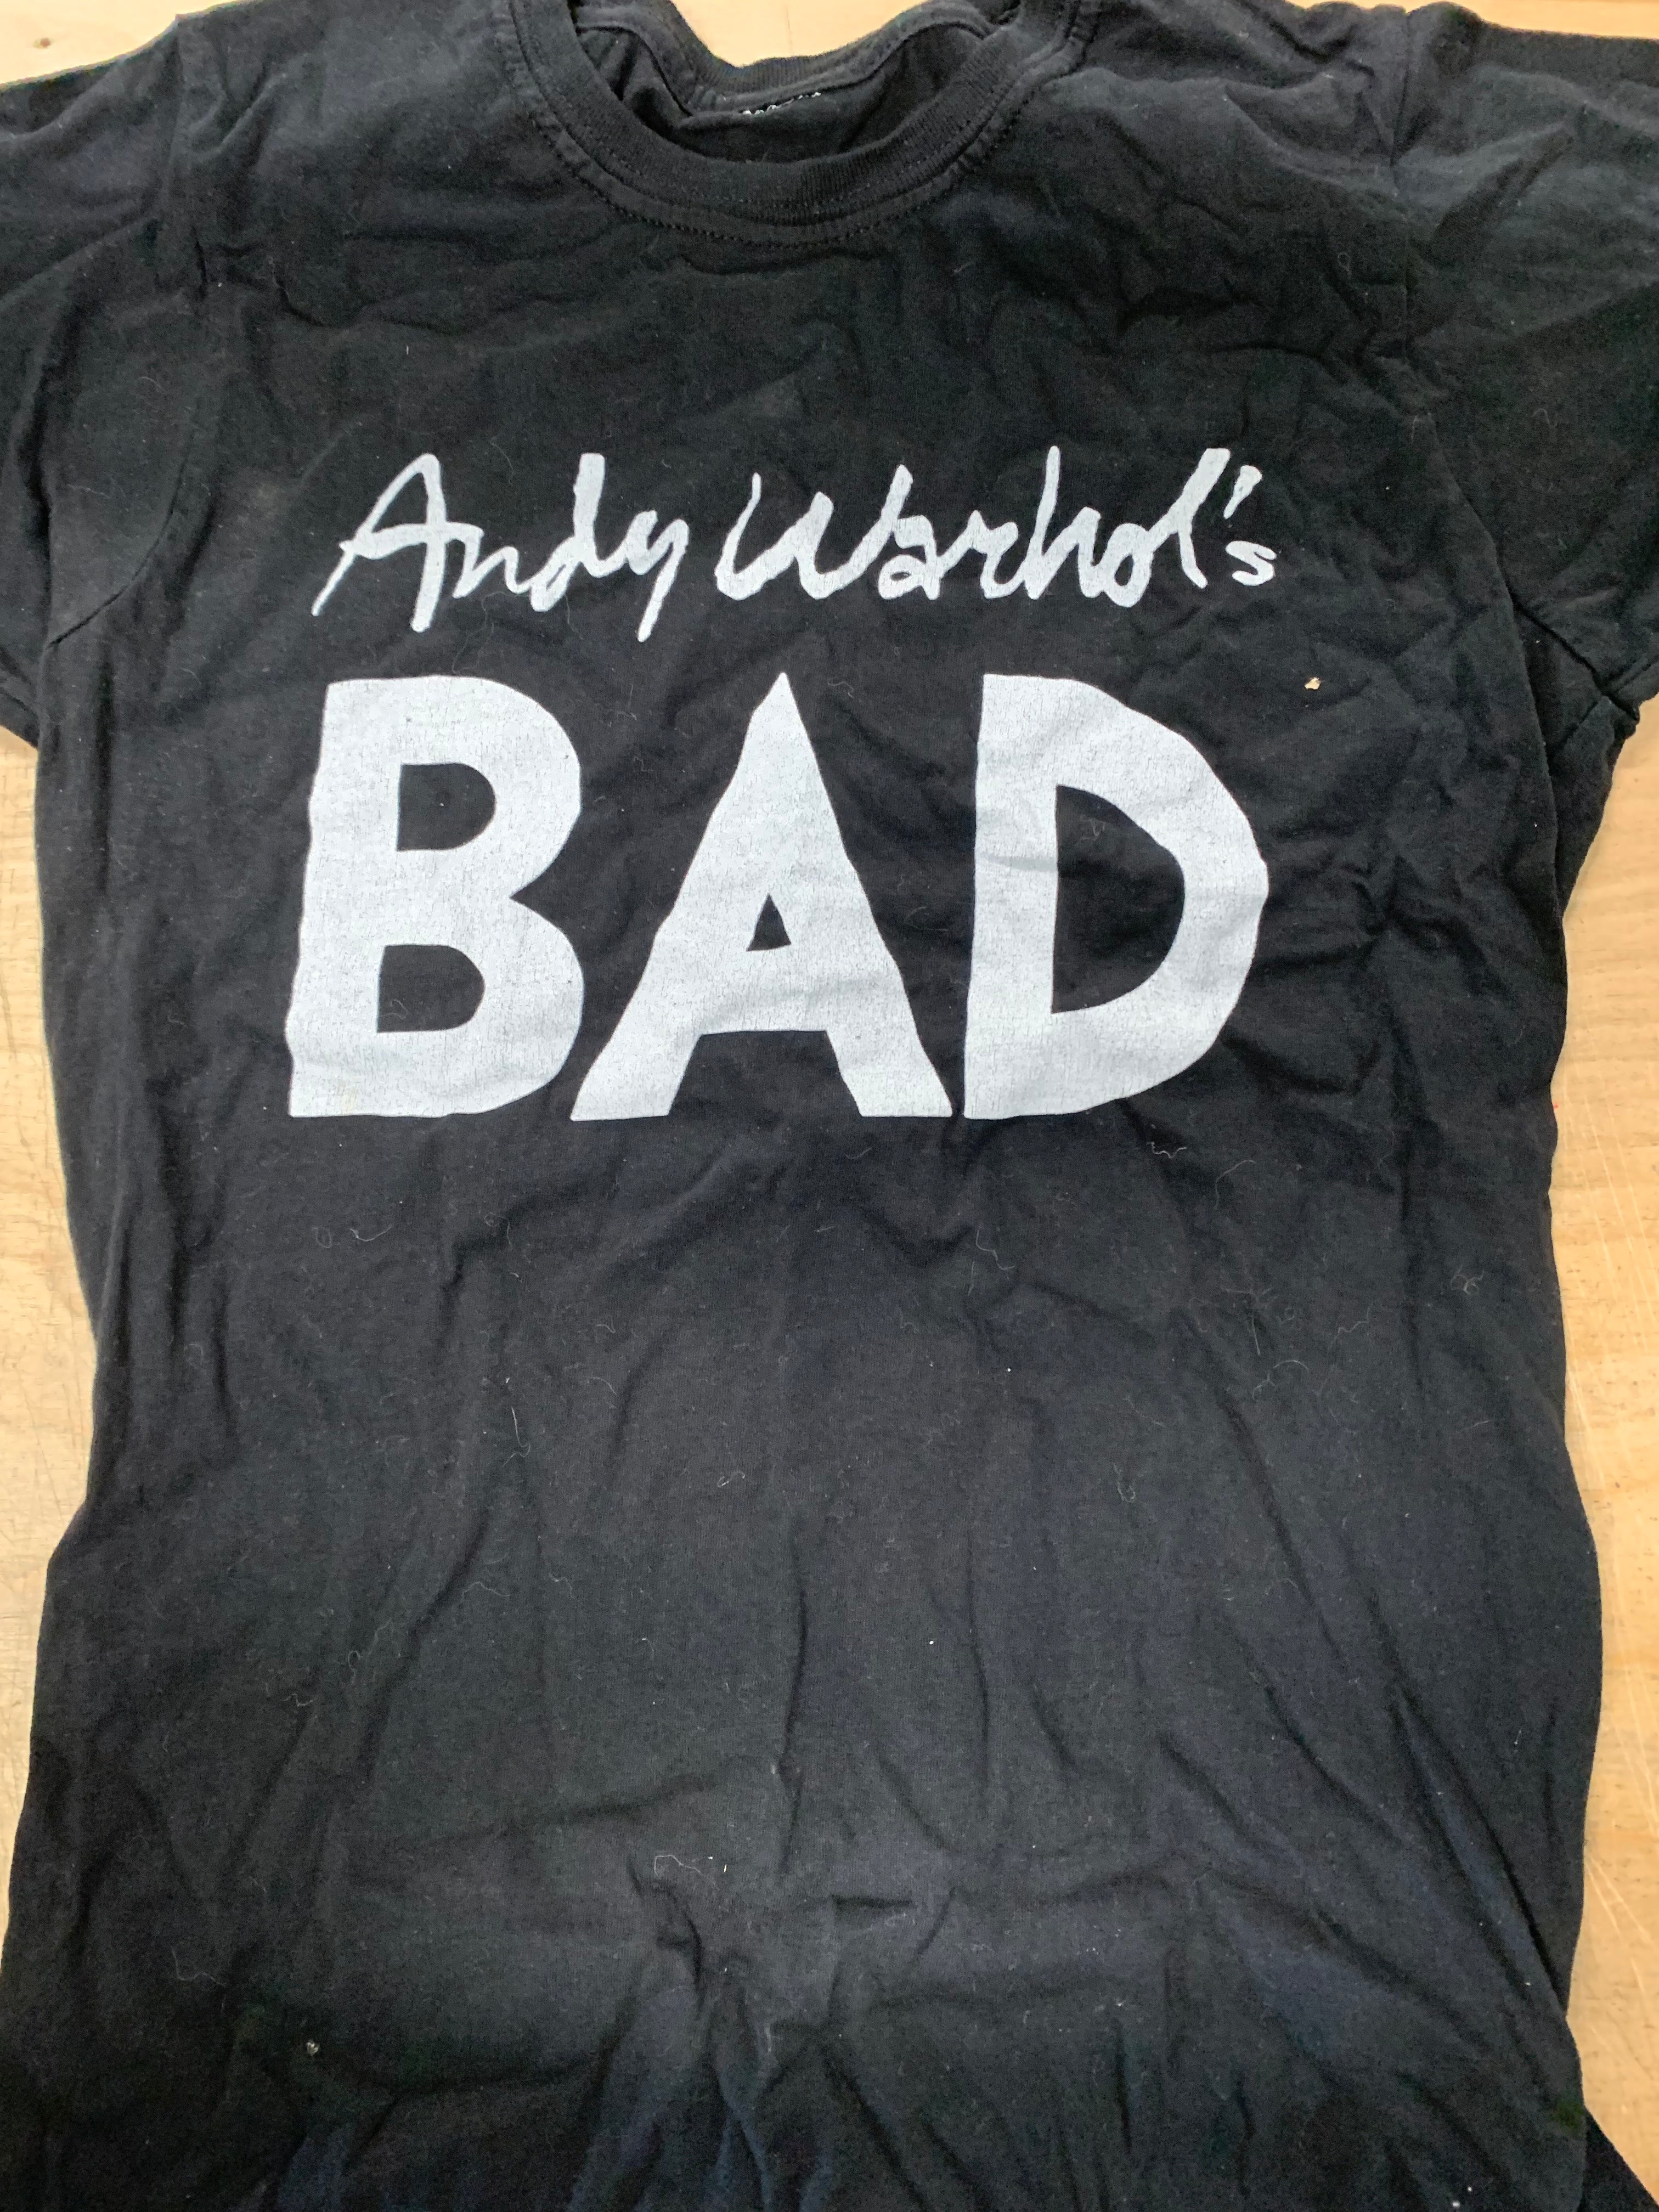 Andy Warhols BAD T-Shirt, Black, Womens XS